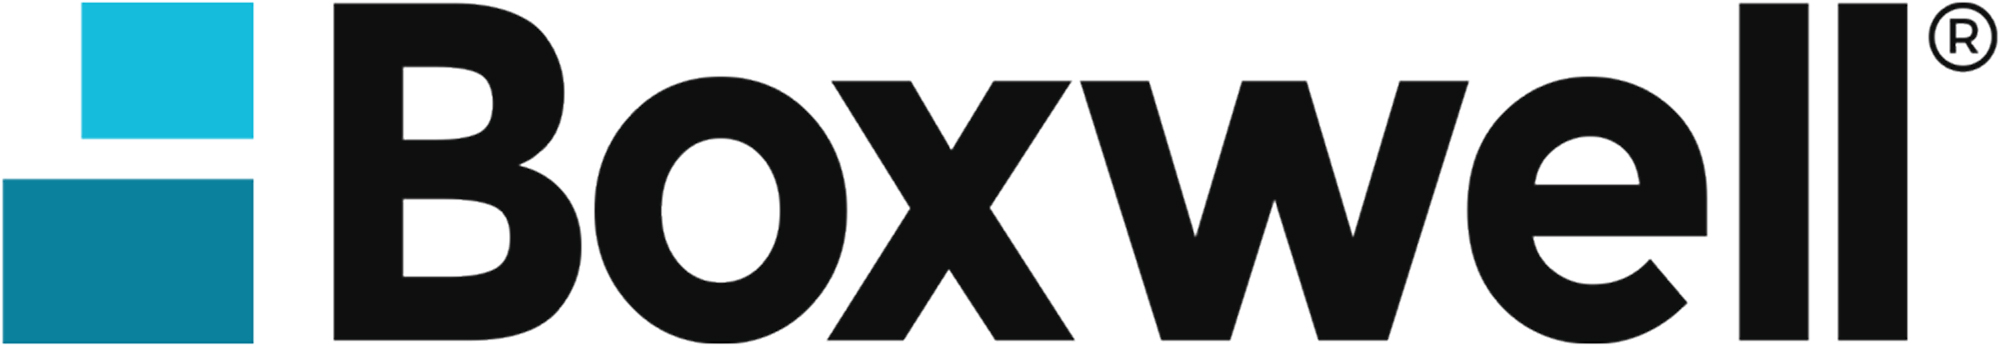 Boxwell logo